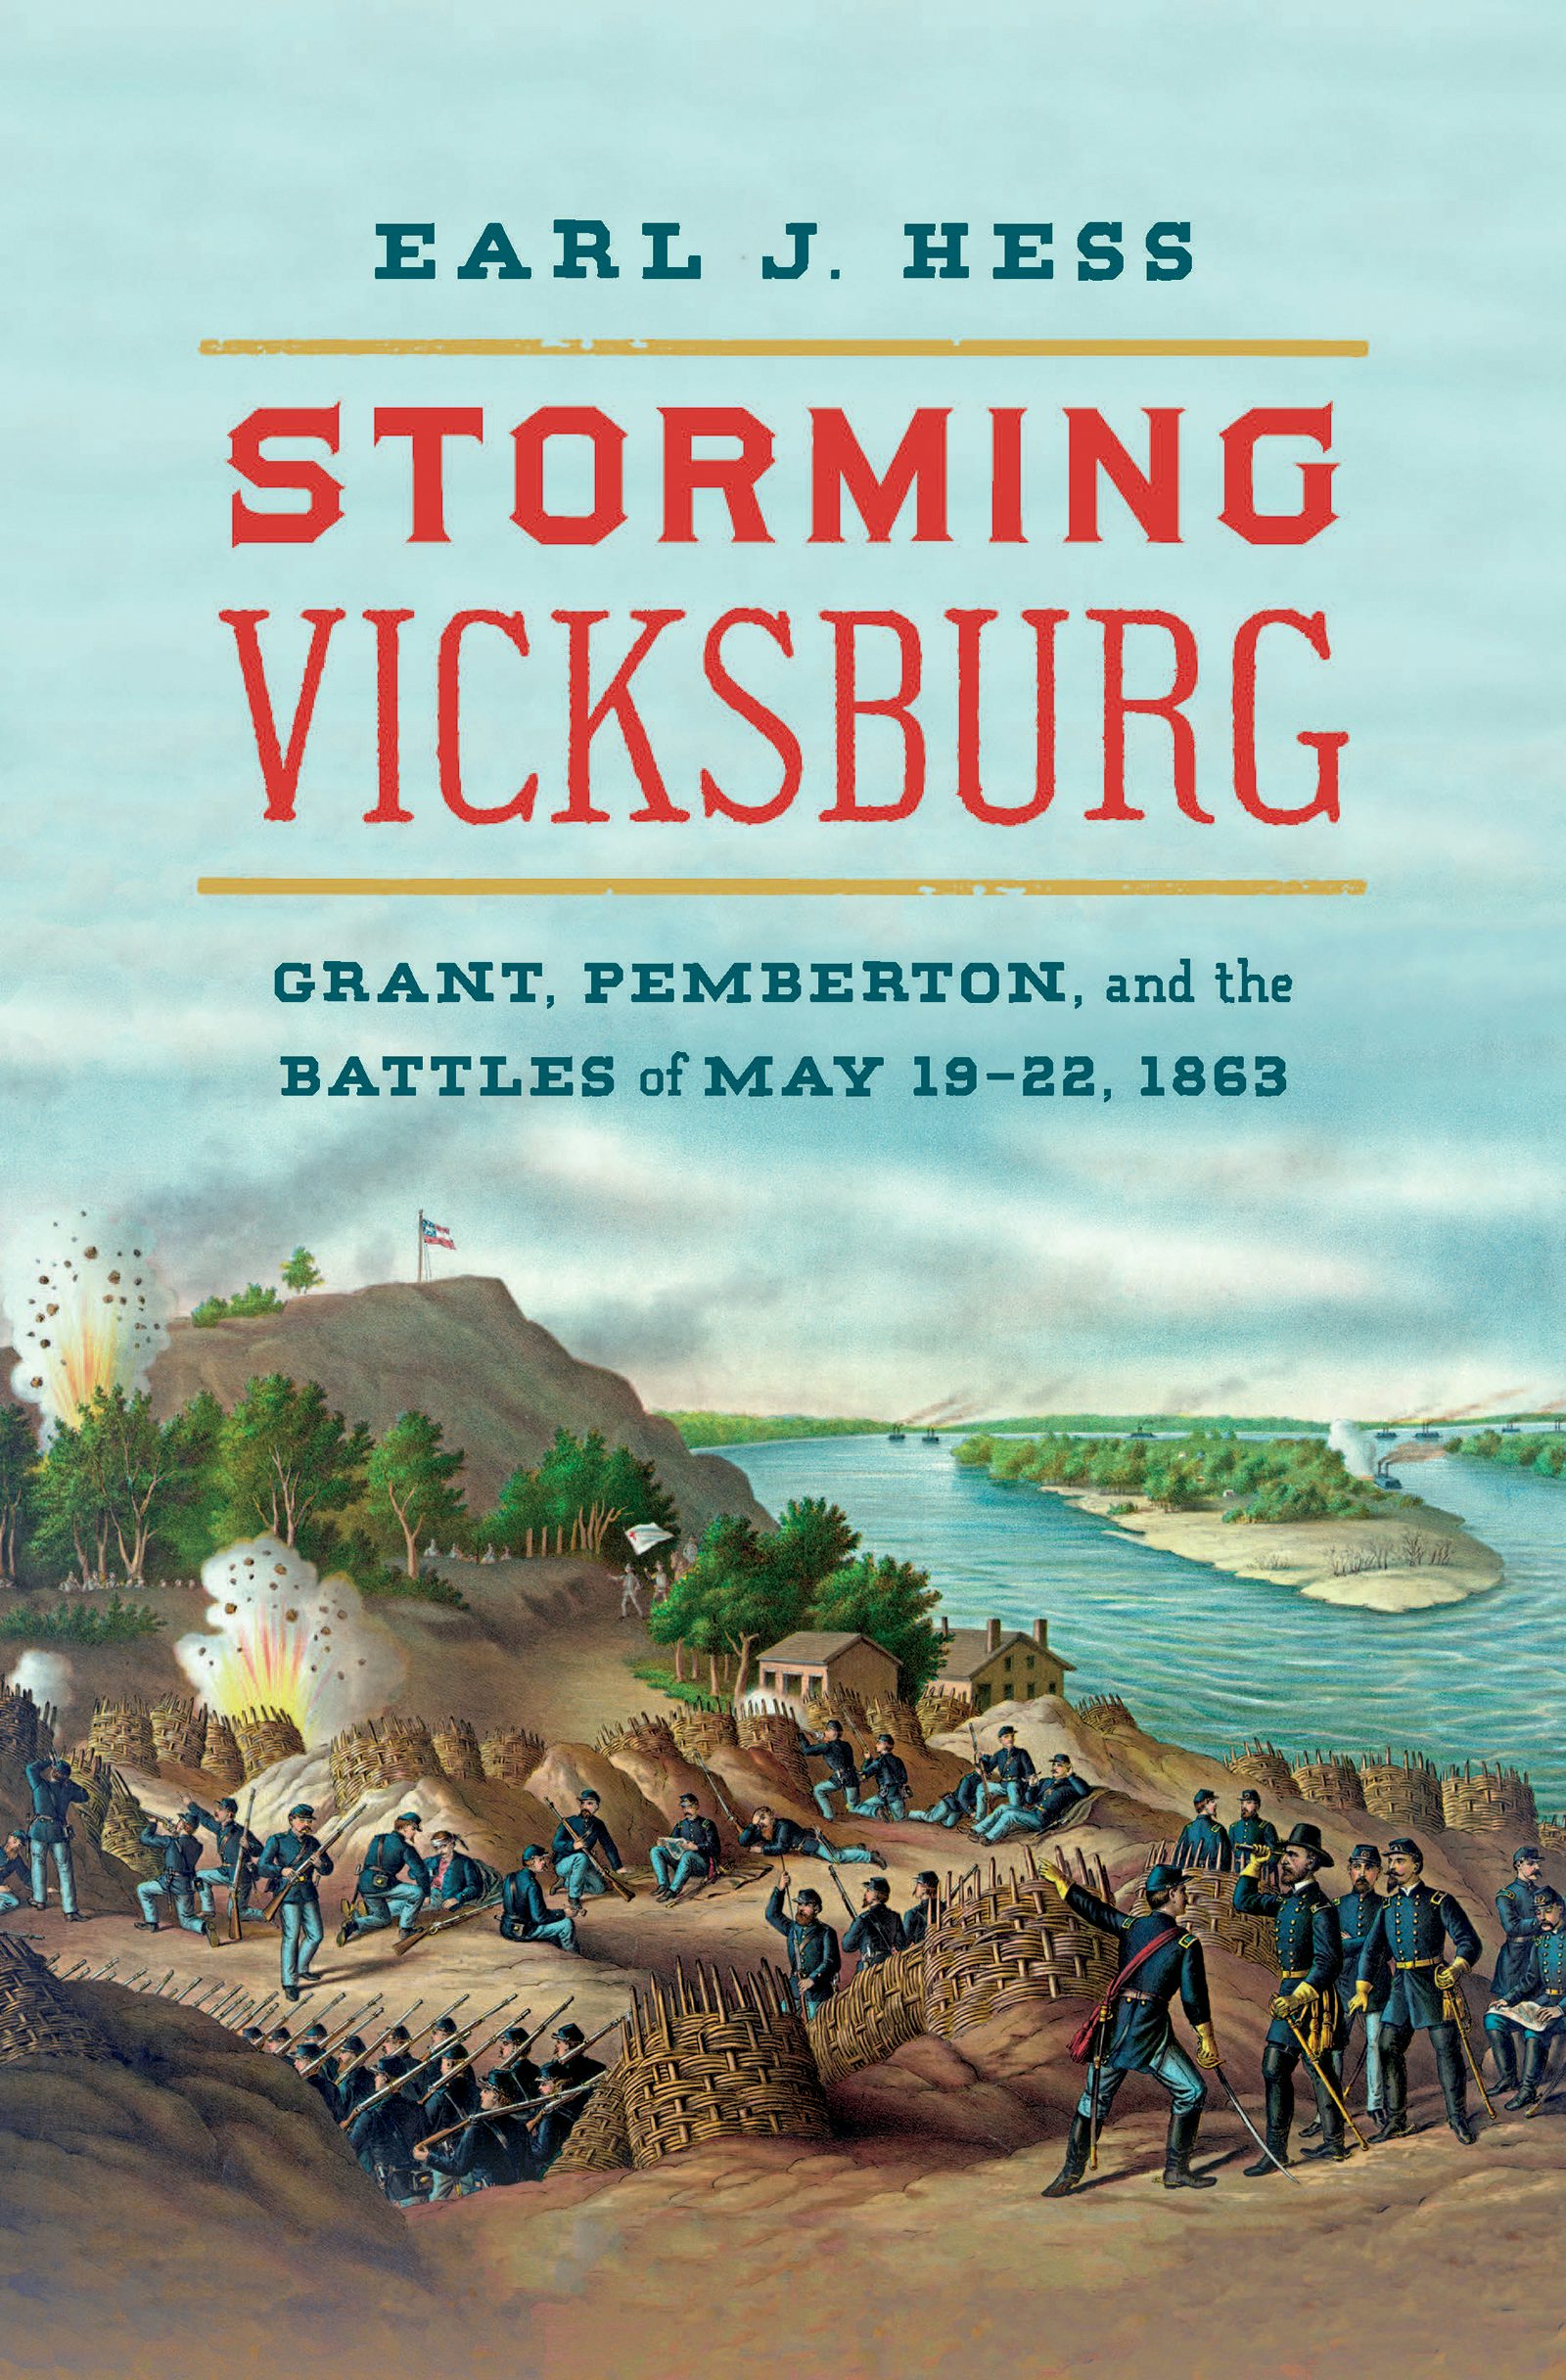 Storming Vicksburg